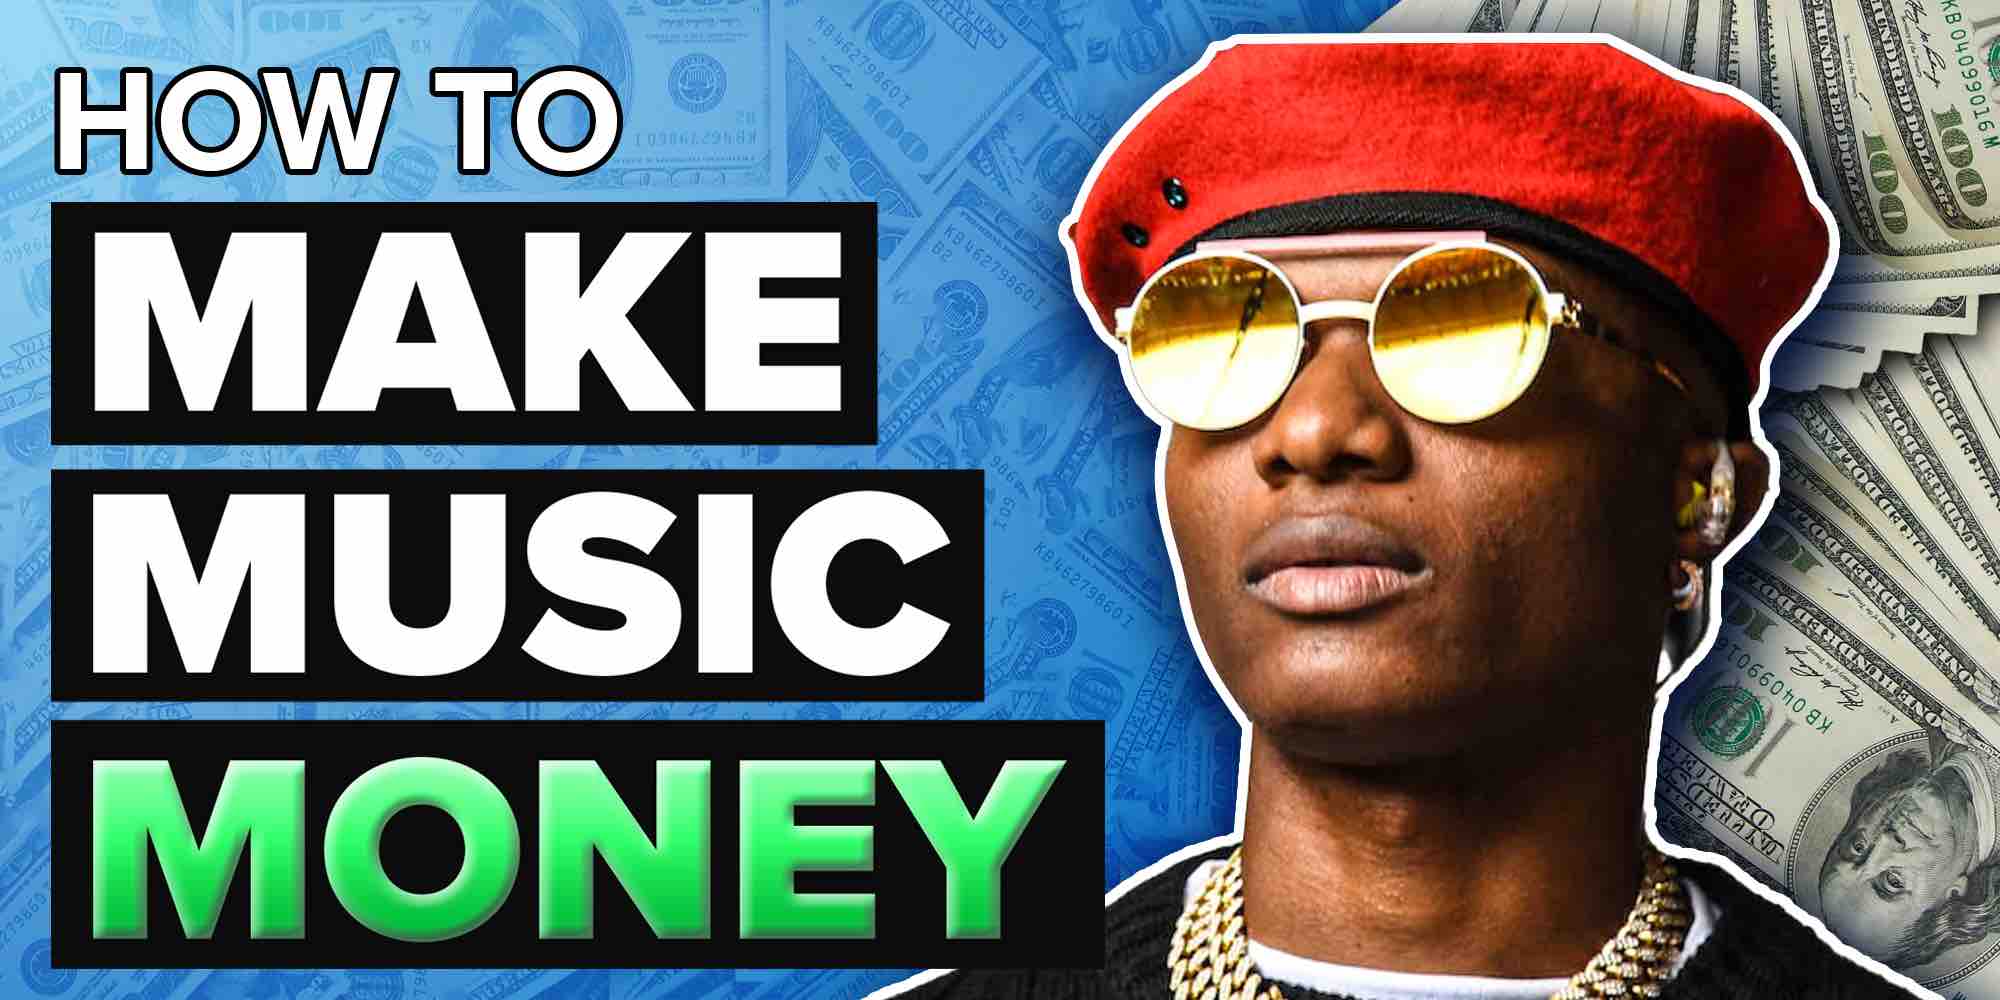 How to make music money